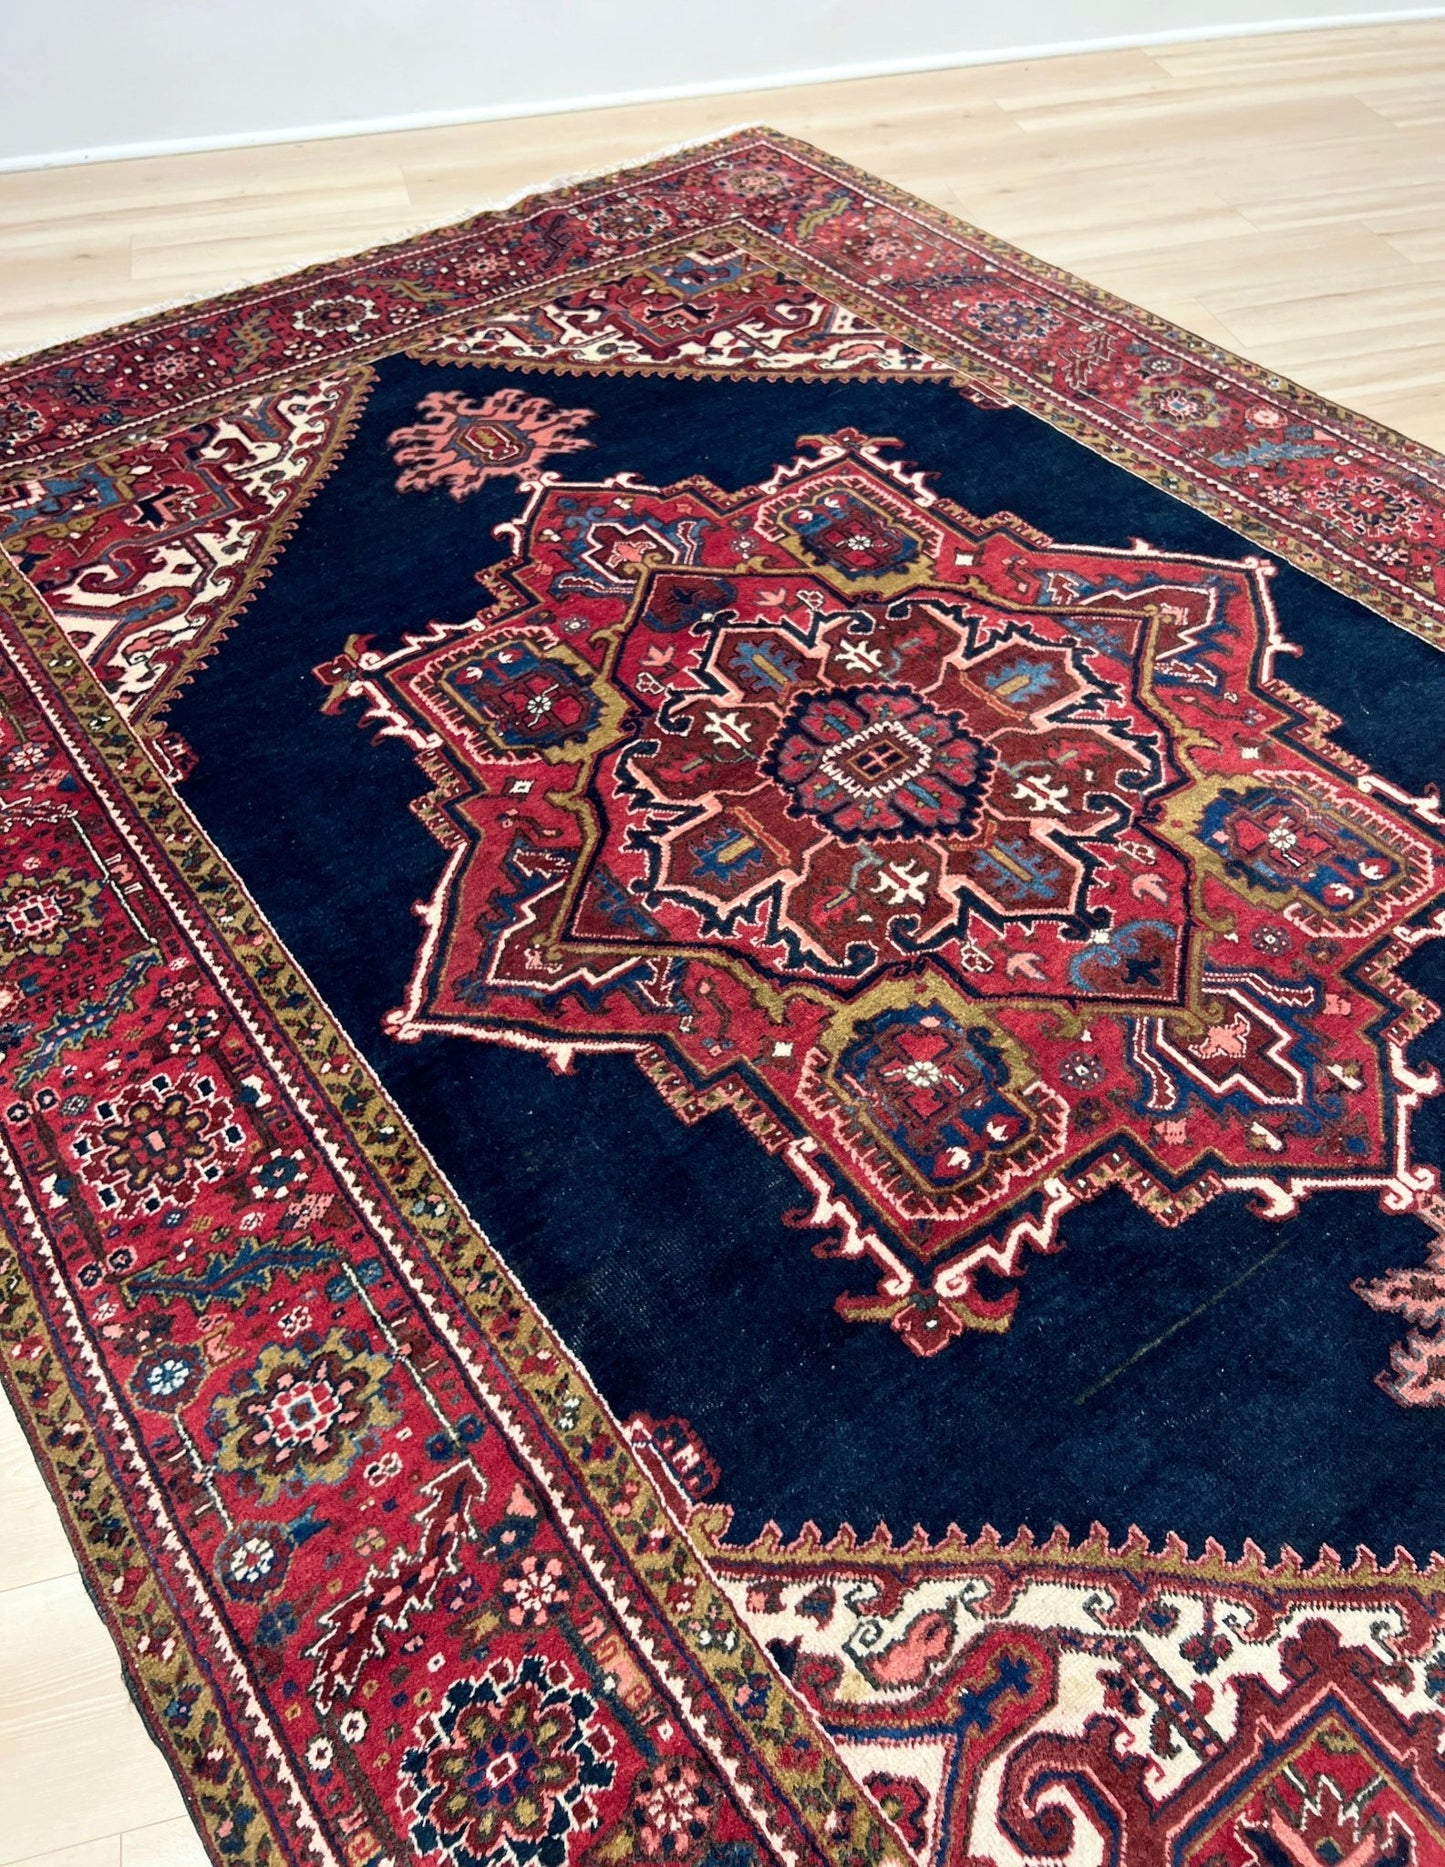 Large heriz vintage persian rug. oriental rug shop san francisco bay area. Buy persian rug online free shipping to US Canada.